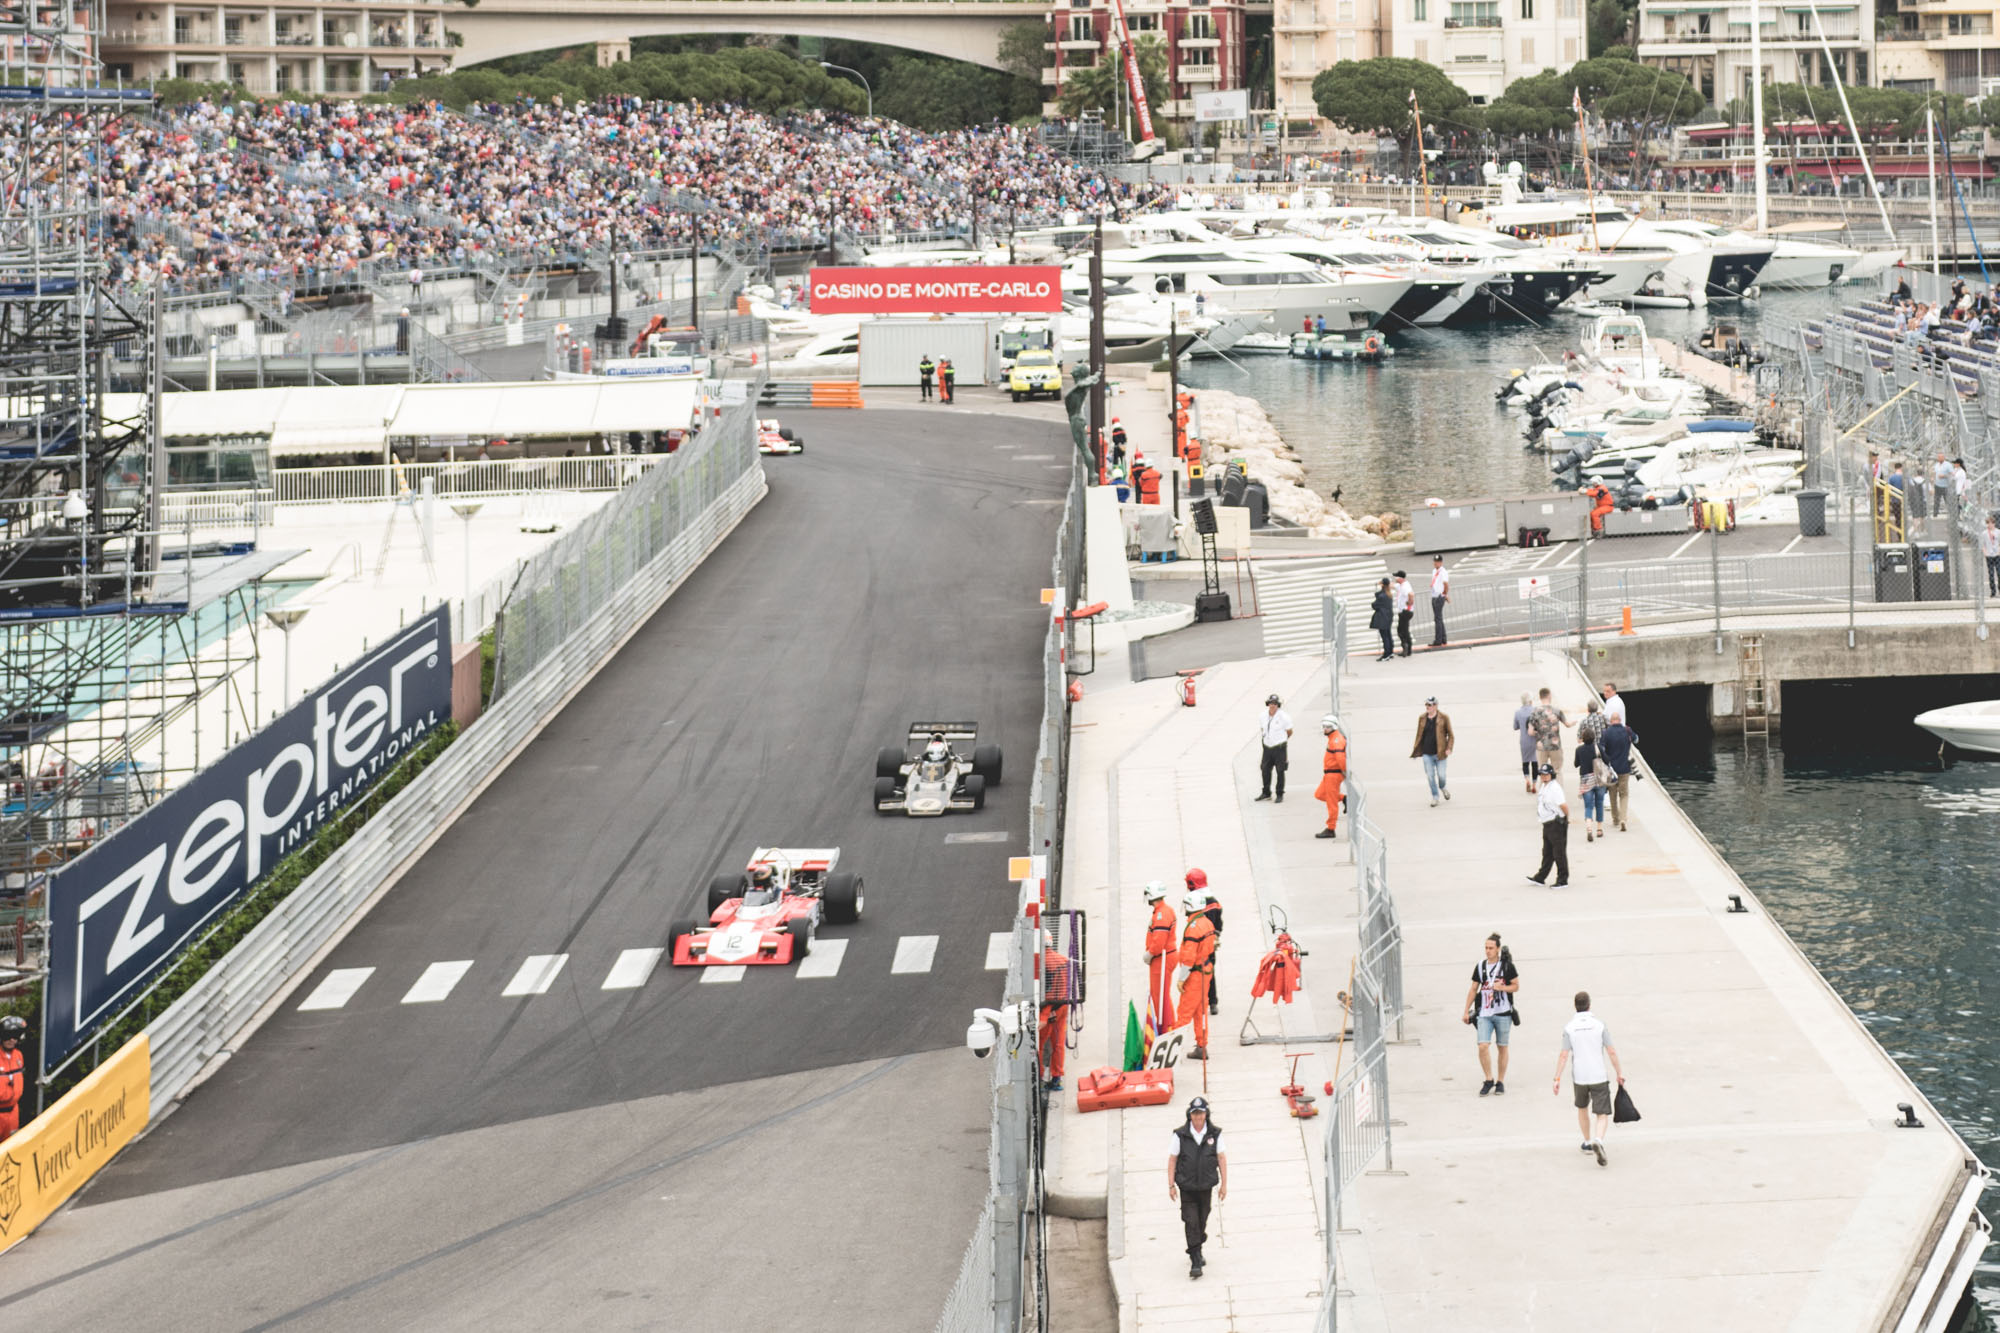 Grand Prix de Monaco Historique - Monaco